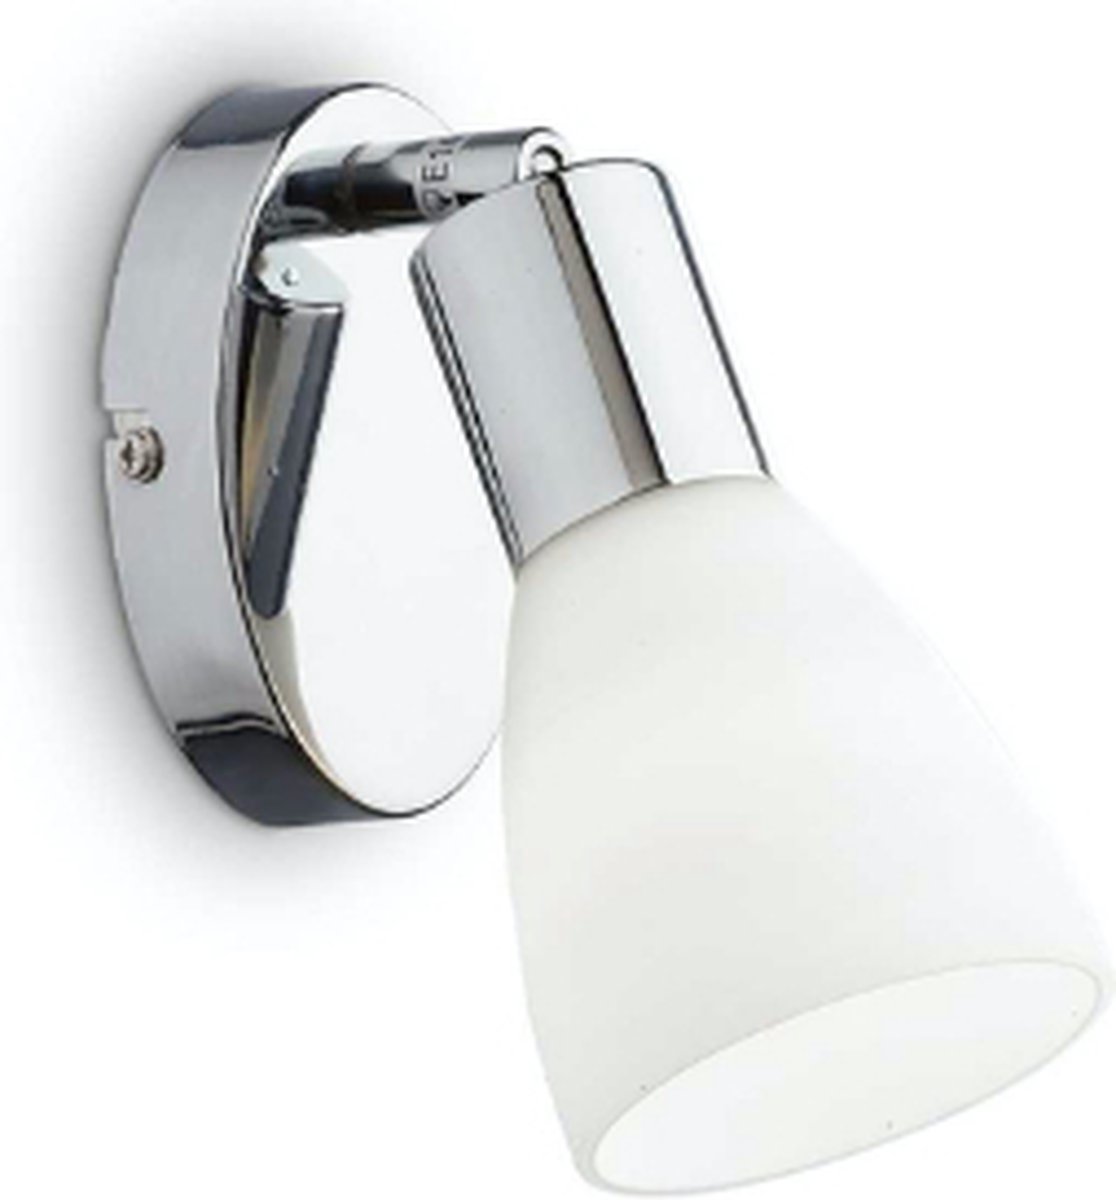 Ideal Lux - Snake - Wandlamp - Metaal - E14 - Chroom - Voor binnen - Lampen - Woonkamer - Eetkamer - Keuken